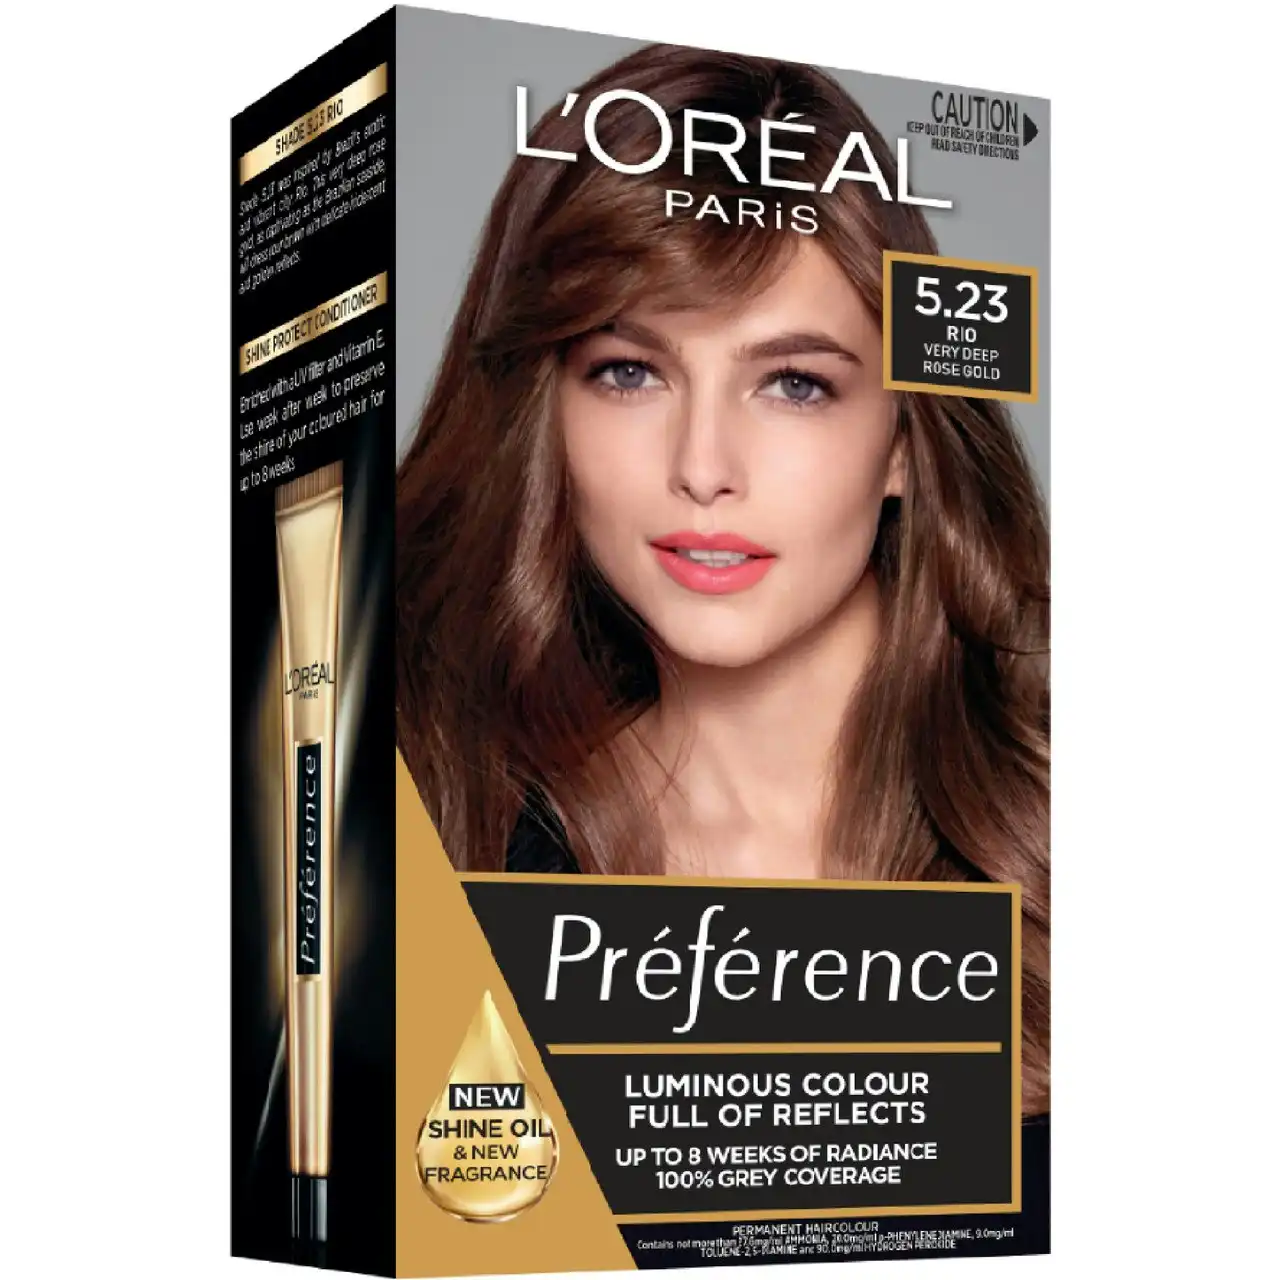 L'Oreal Paris Preference Permanent Hair Colour - 5.23 Rio (Very Deep Rose Gold)